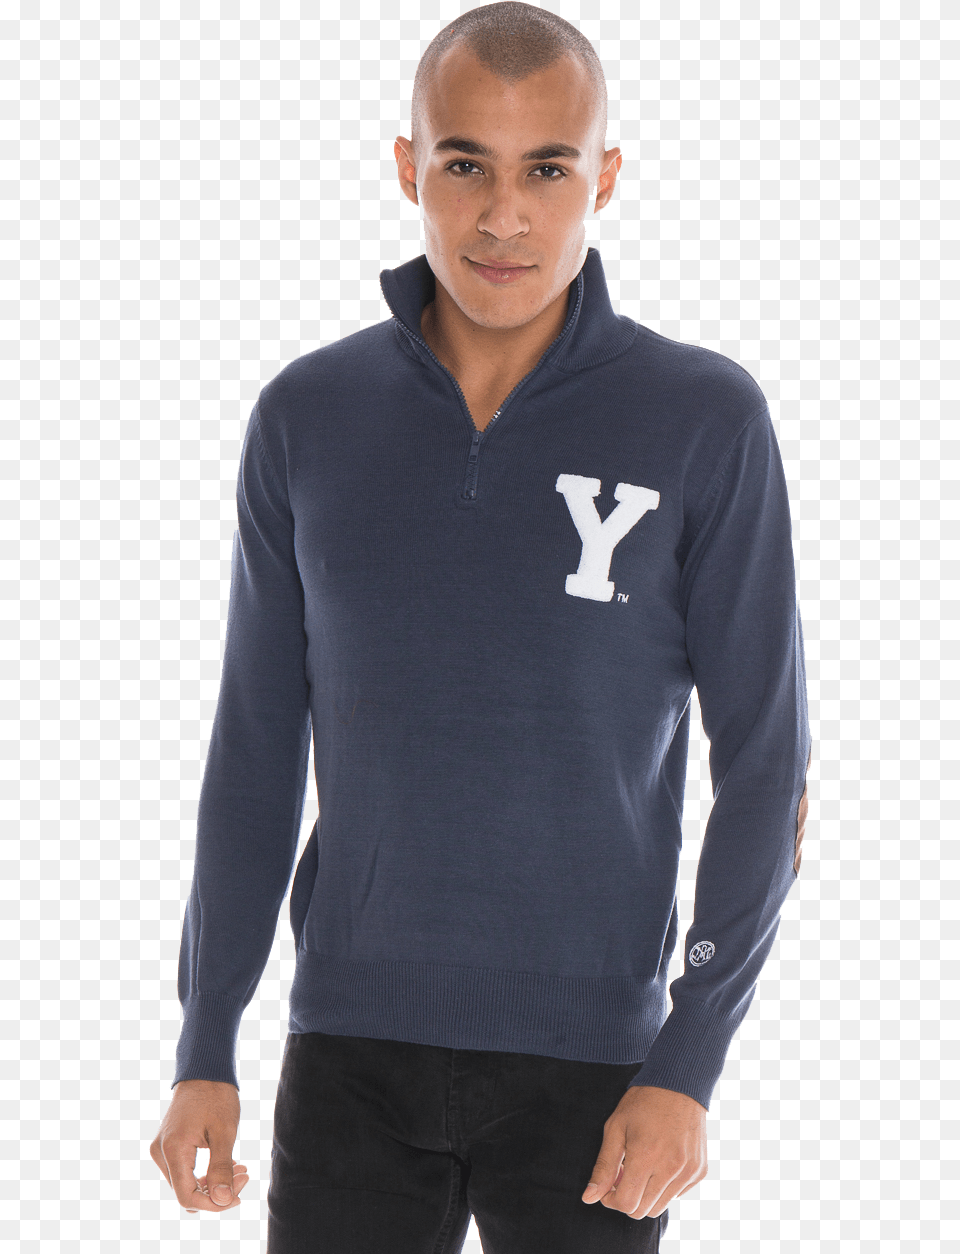 Shirt, Sweatshirt, Sweater, Sleeve, Long Sleeve Png Image